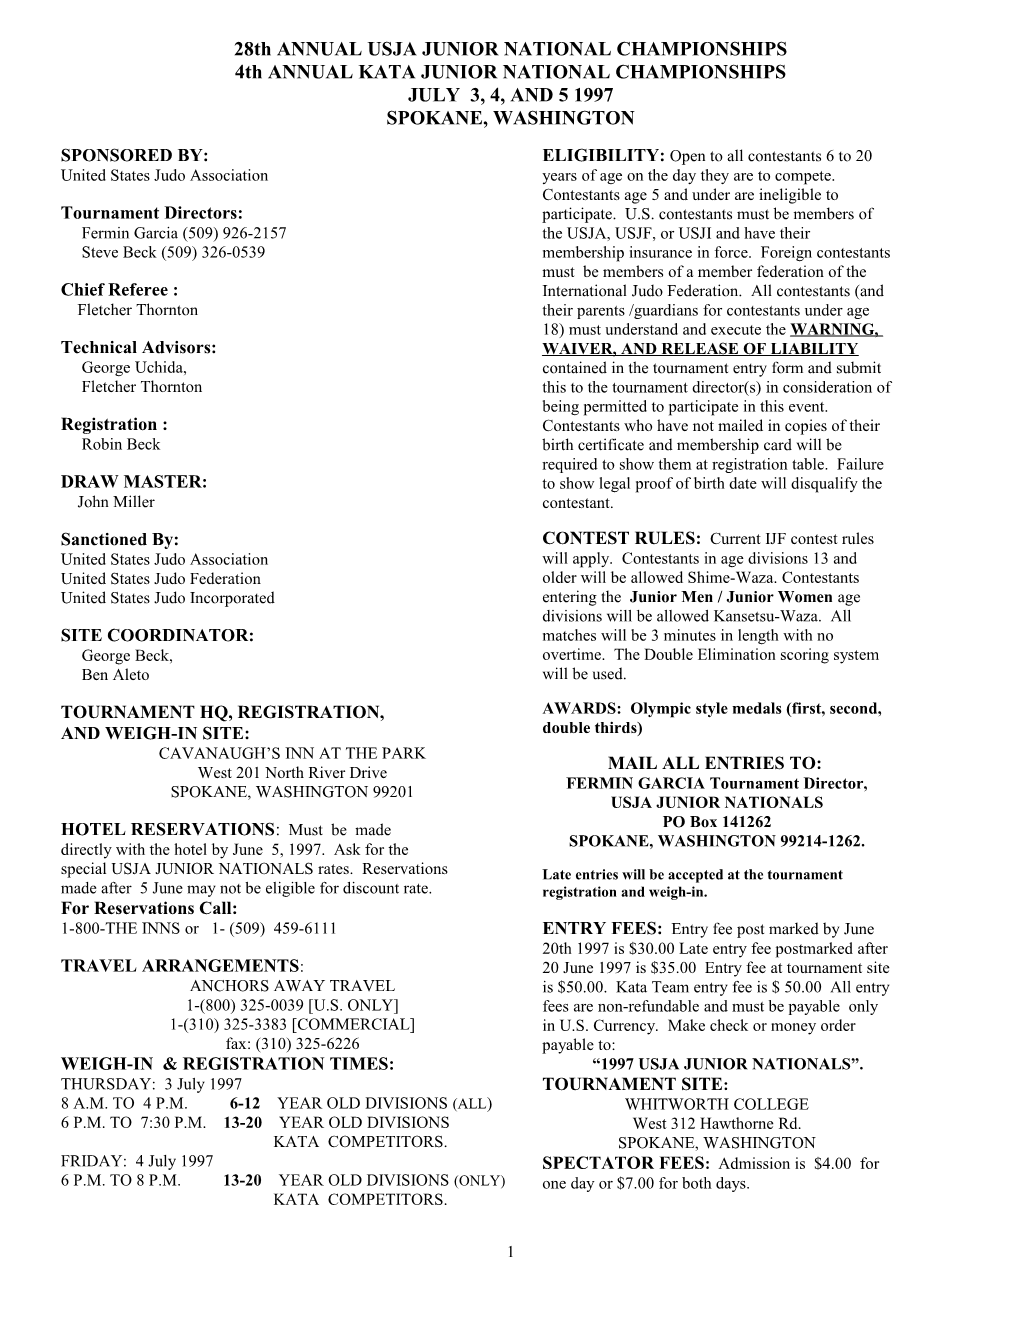 Offical 1997 Usja Kata Entry Form